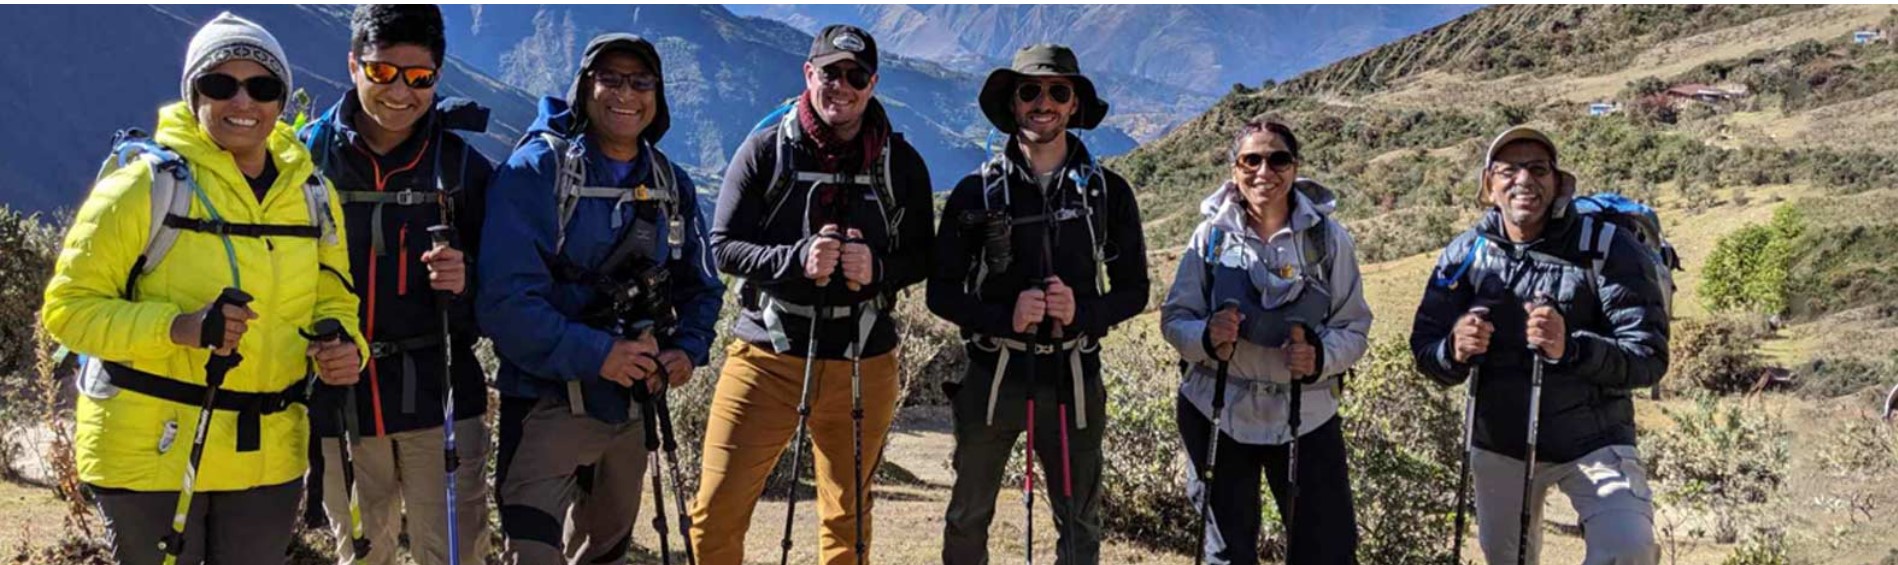 The Ultimate Cultural Trek: The Lares Trek to Machu Picchu